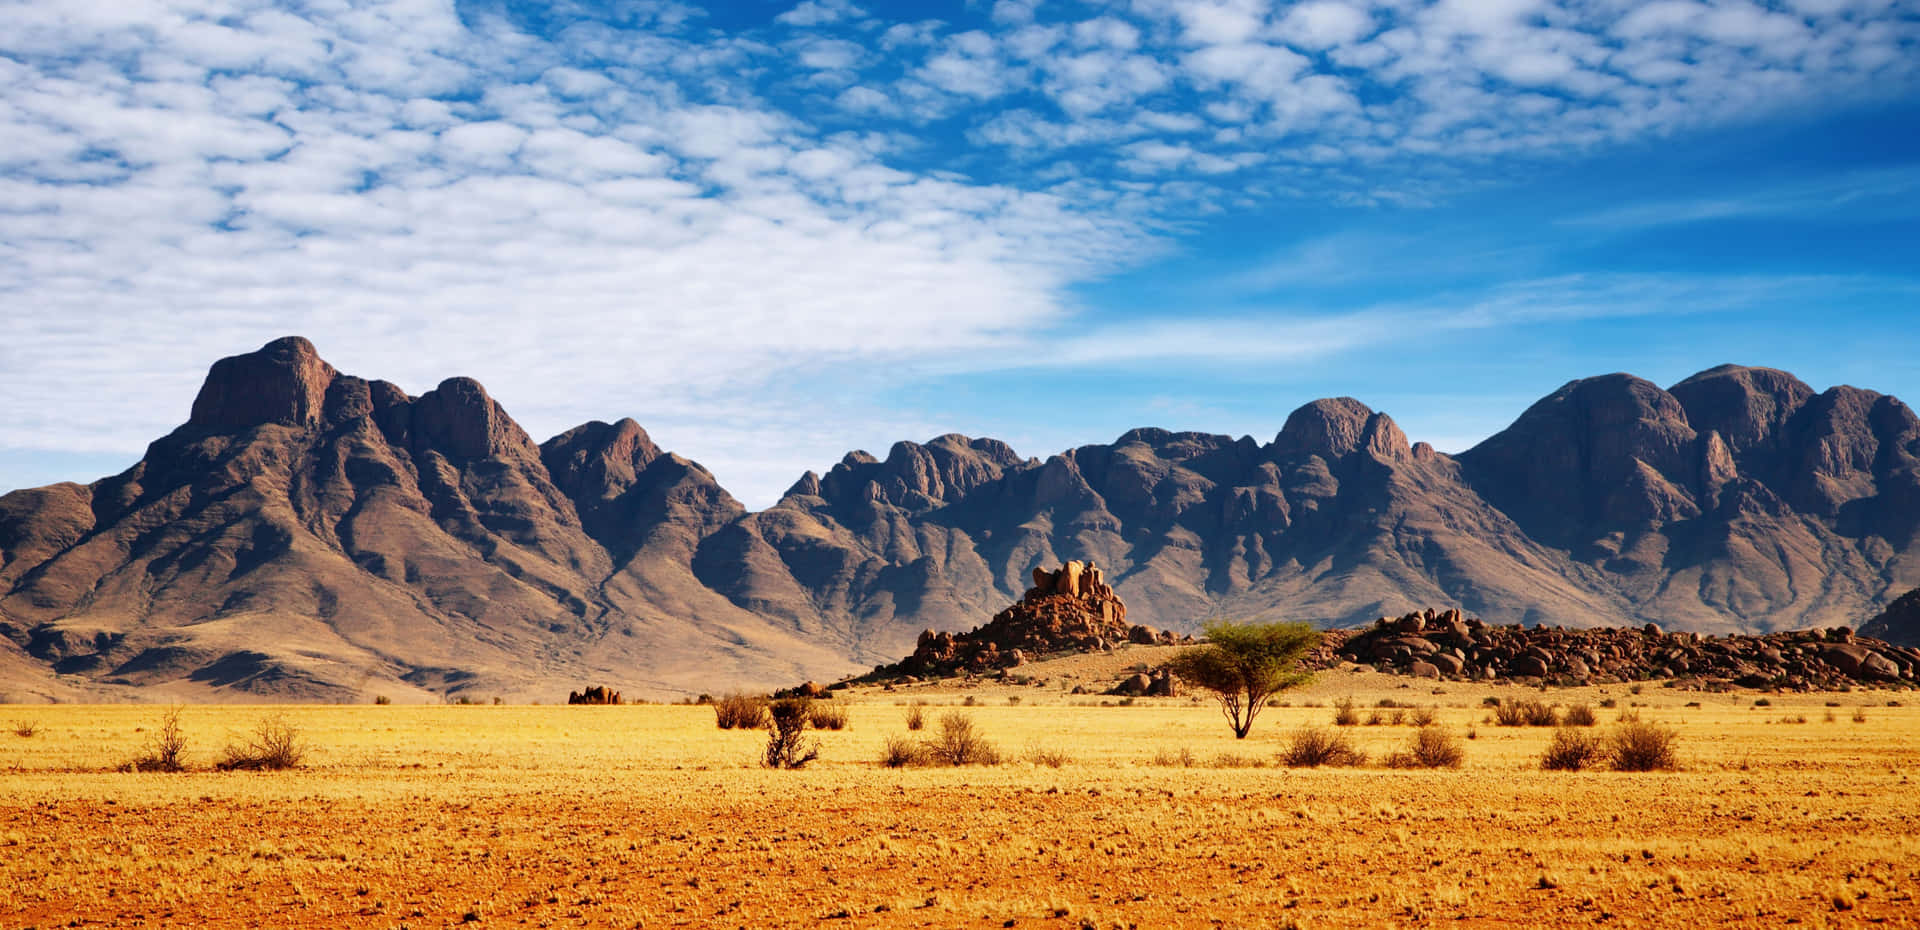 South African Namib Desert Mountain Landscape Wallpaper